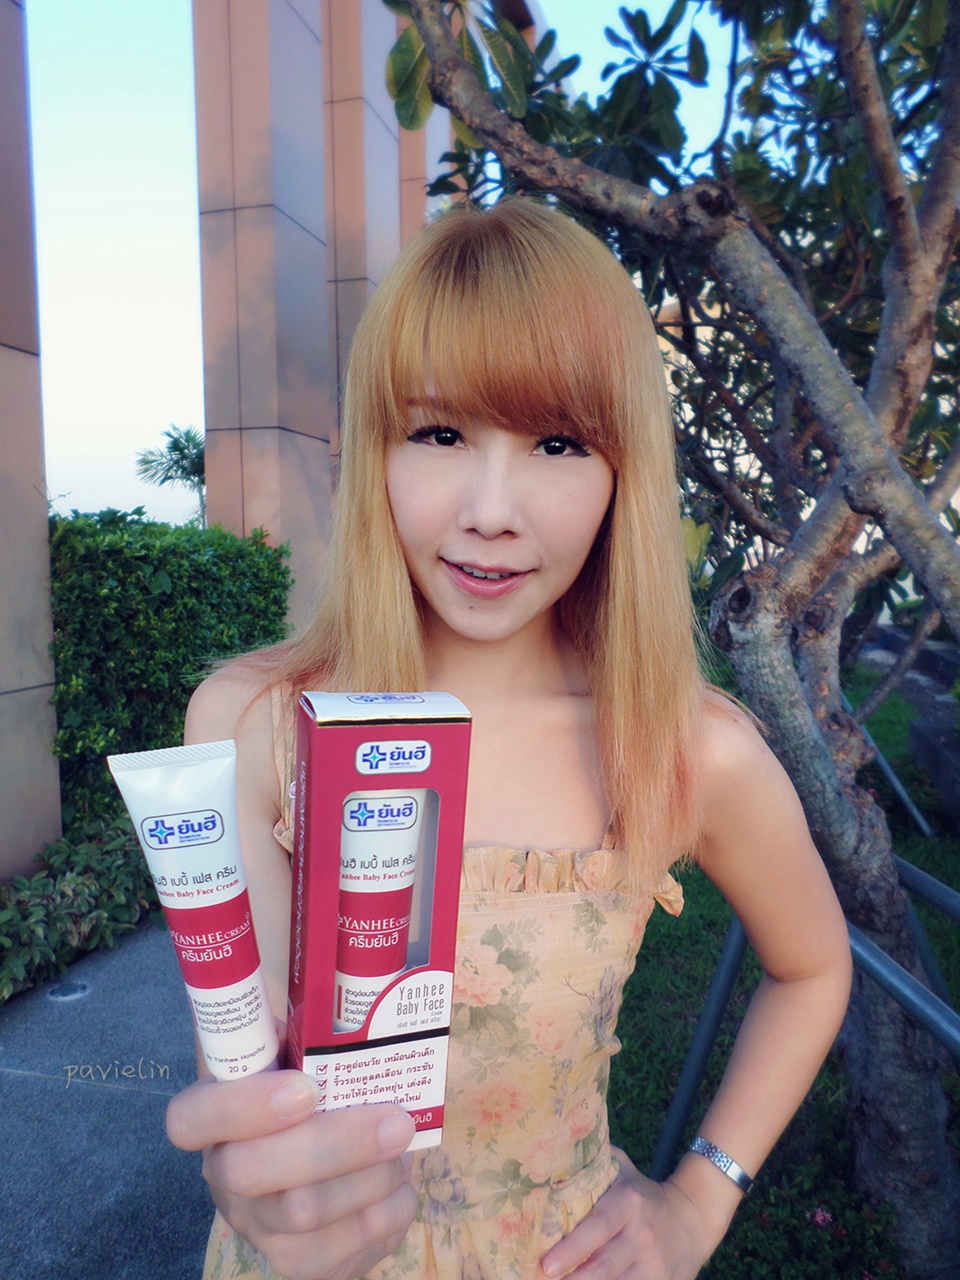 Yanhee Baby Face Cream (ѹ ຺  ) ǹͧ "Hyaluronic Acid"